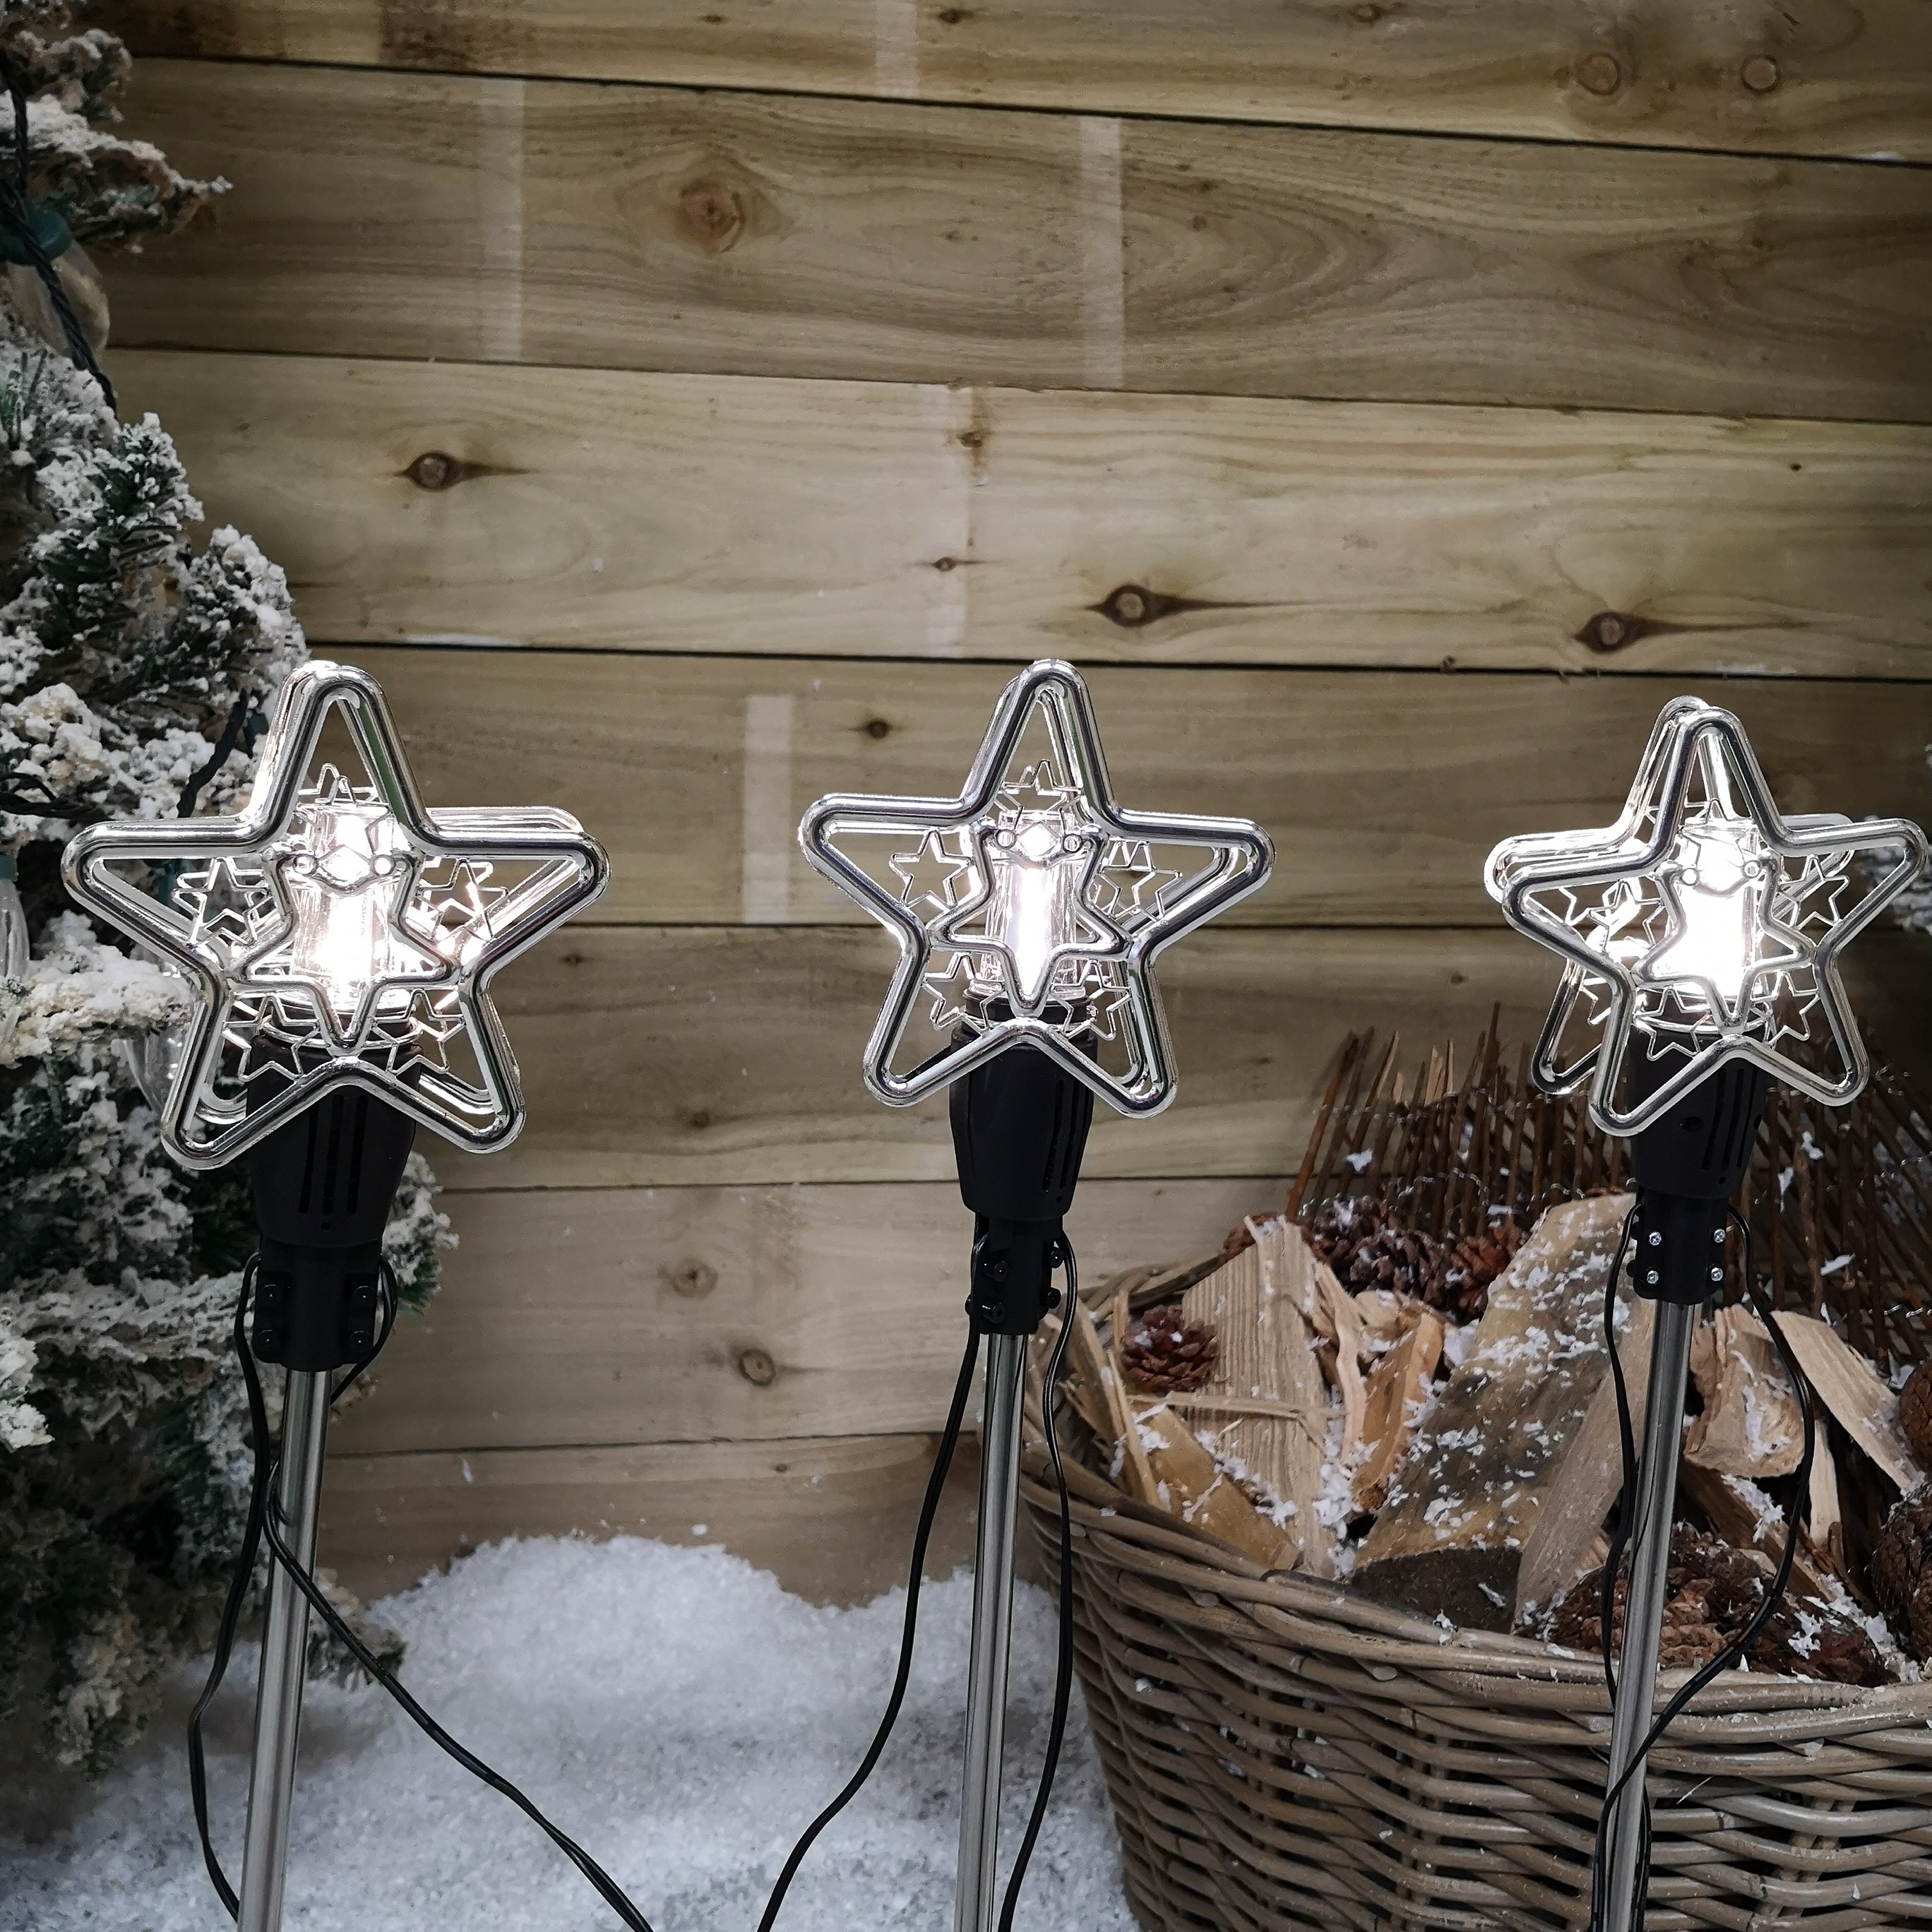 Set of 3 Christmas Star Flashing Warm White LED Connectable Pathfinder Lights